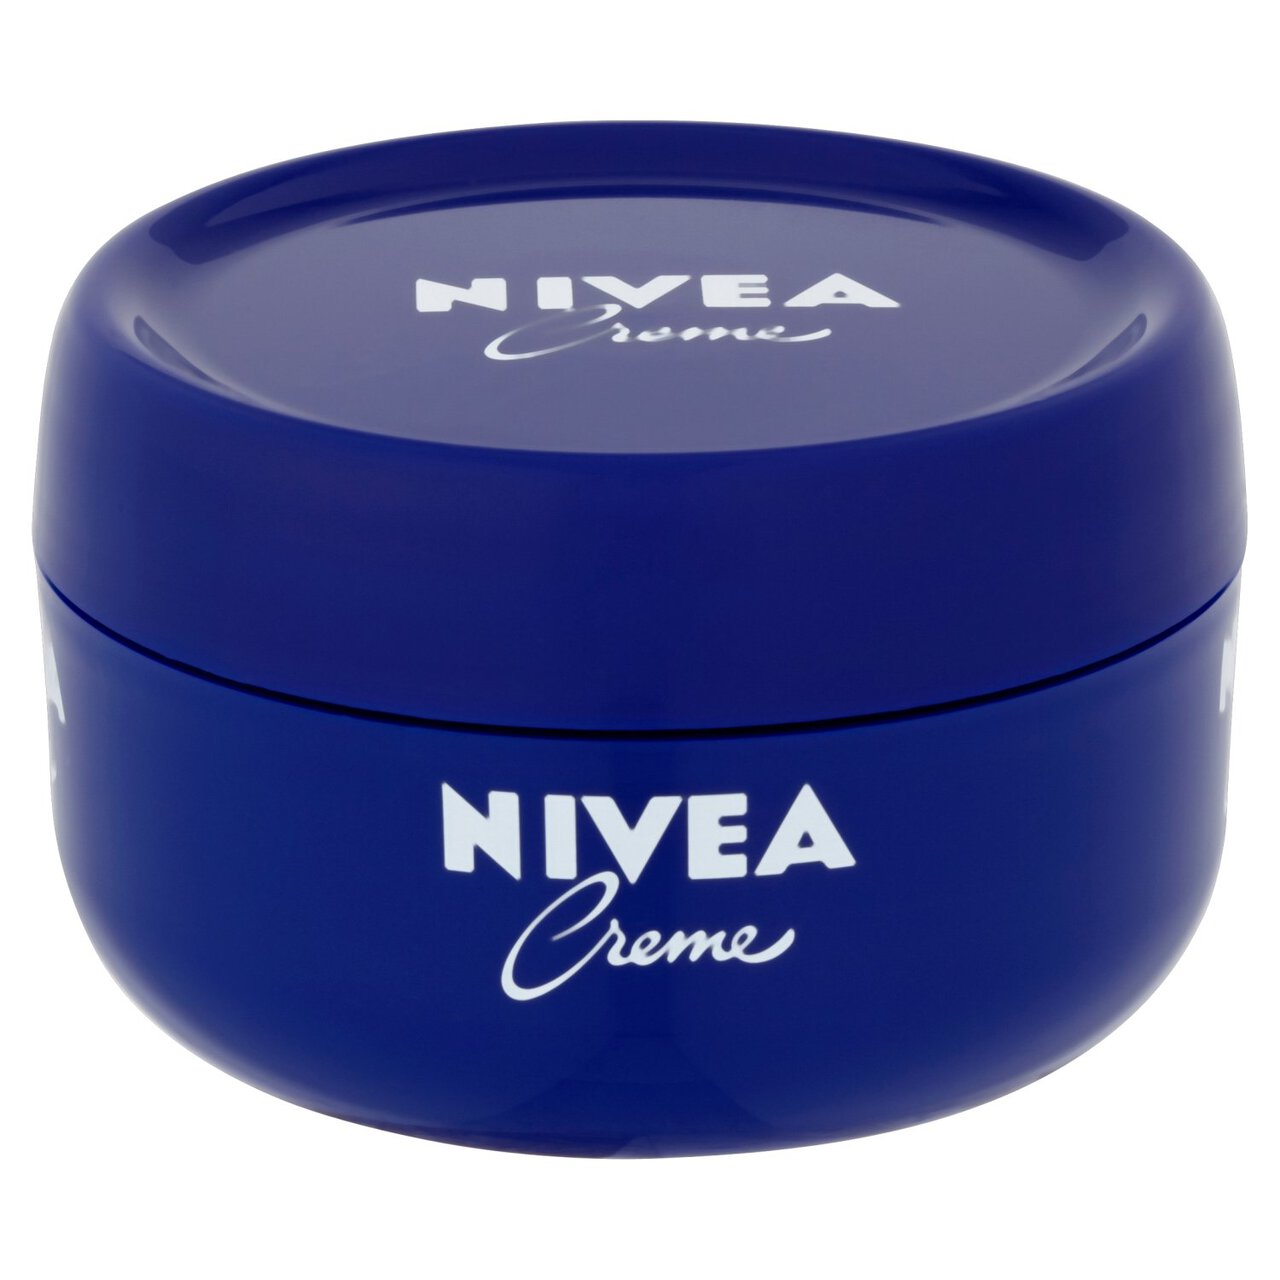 NIVEA Creme Moisturiser Cream for Face, Hands and Body 200ml